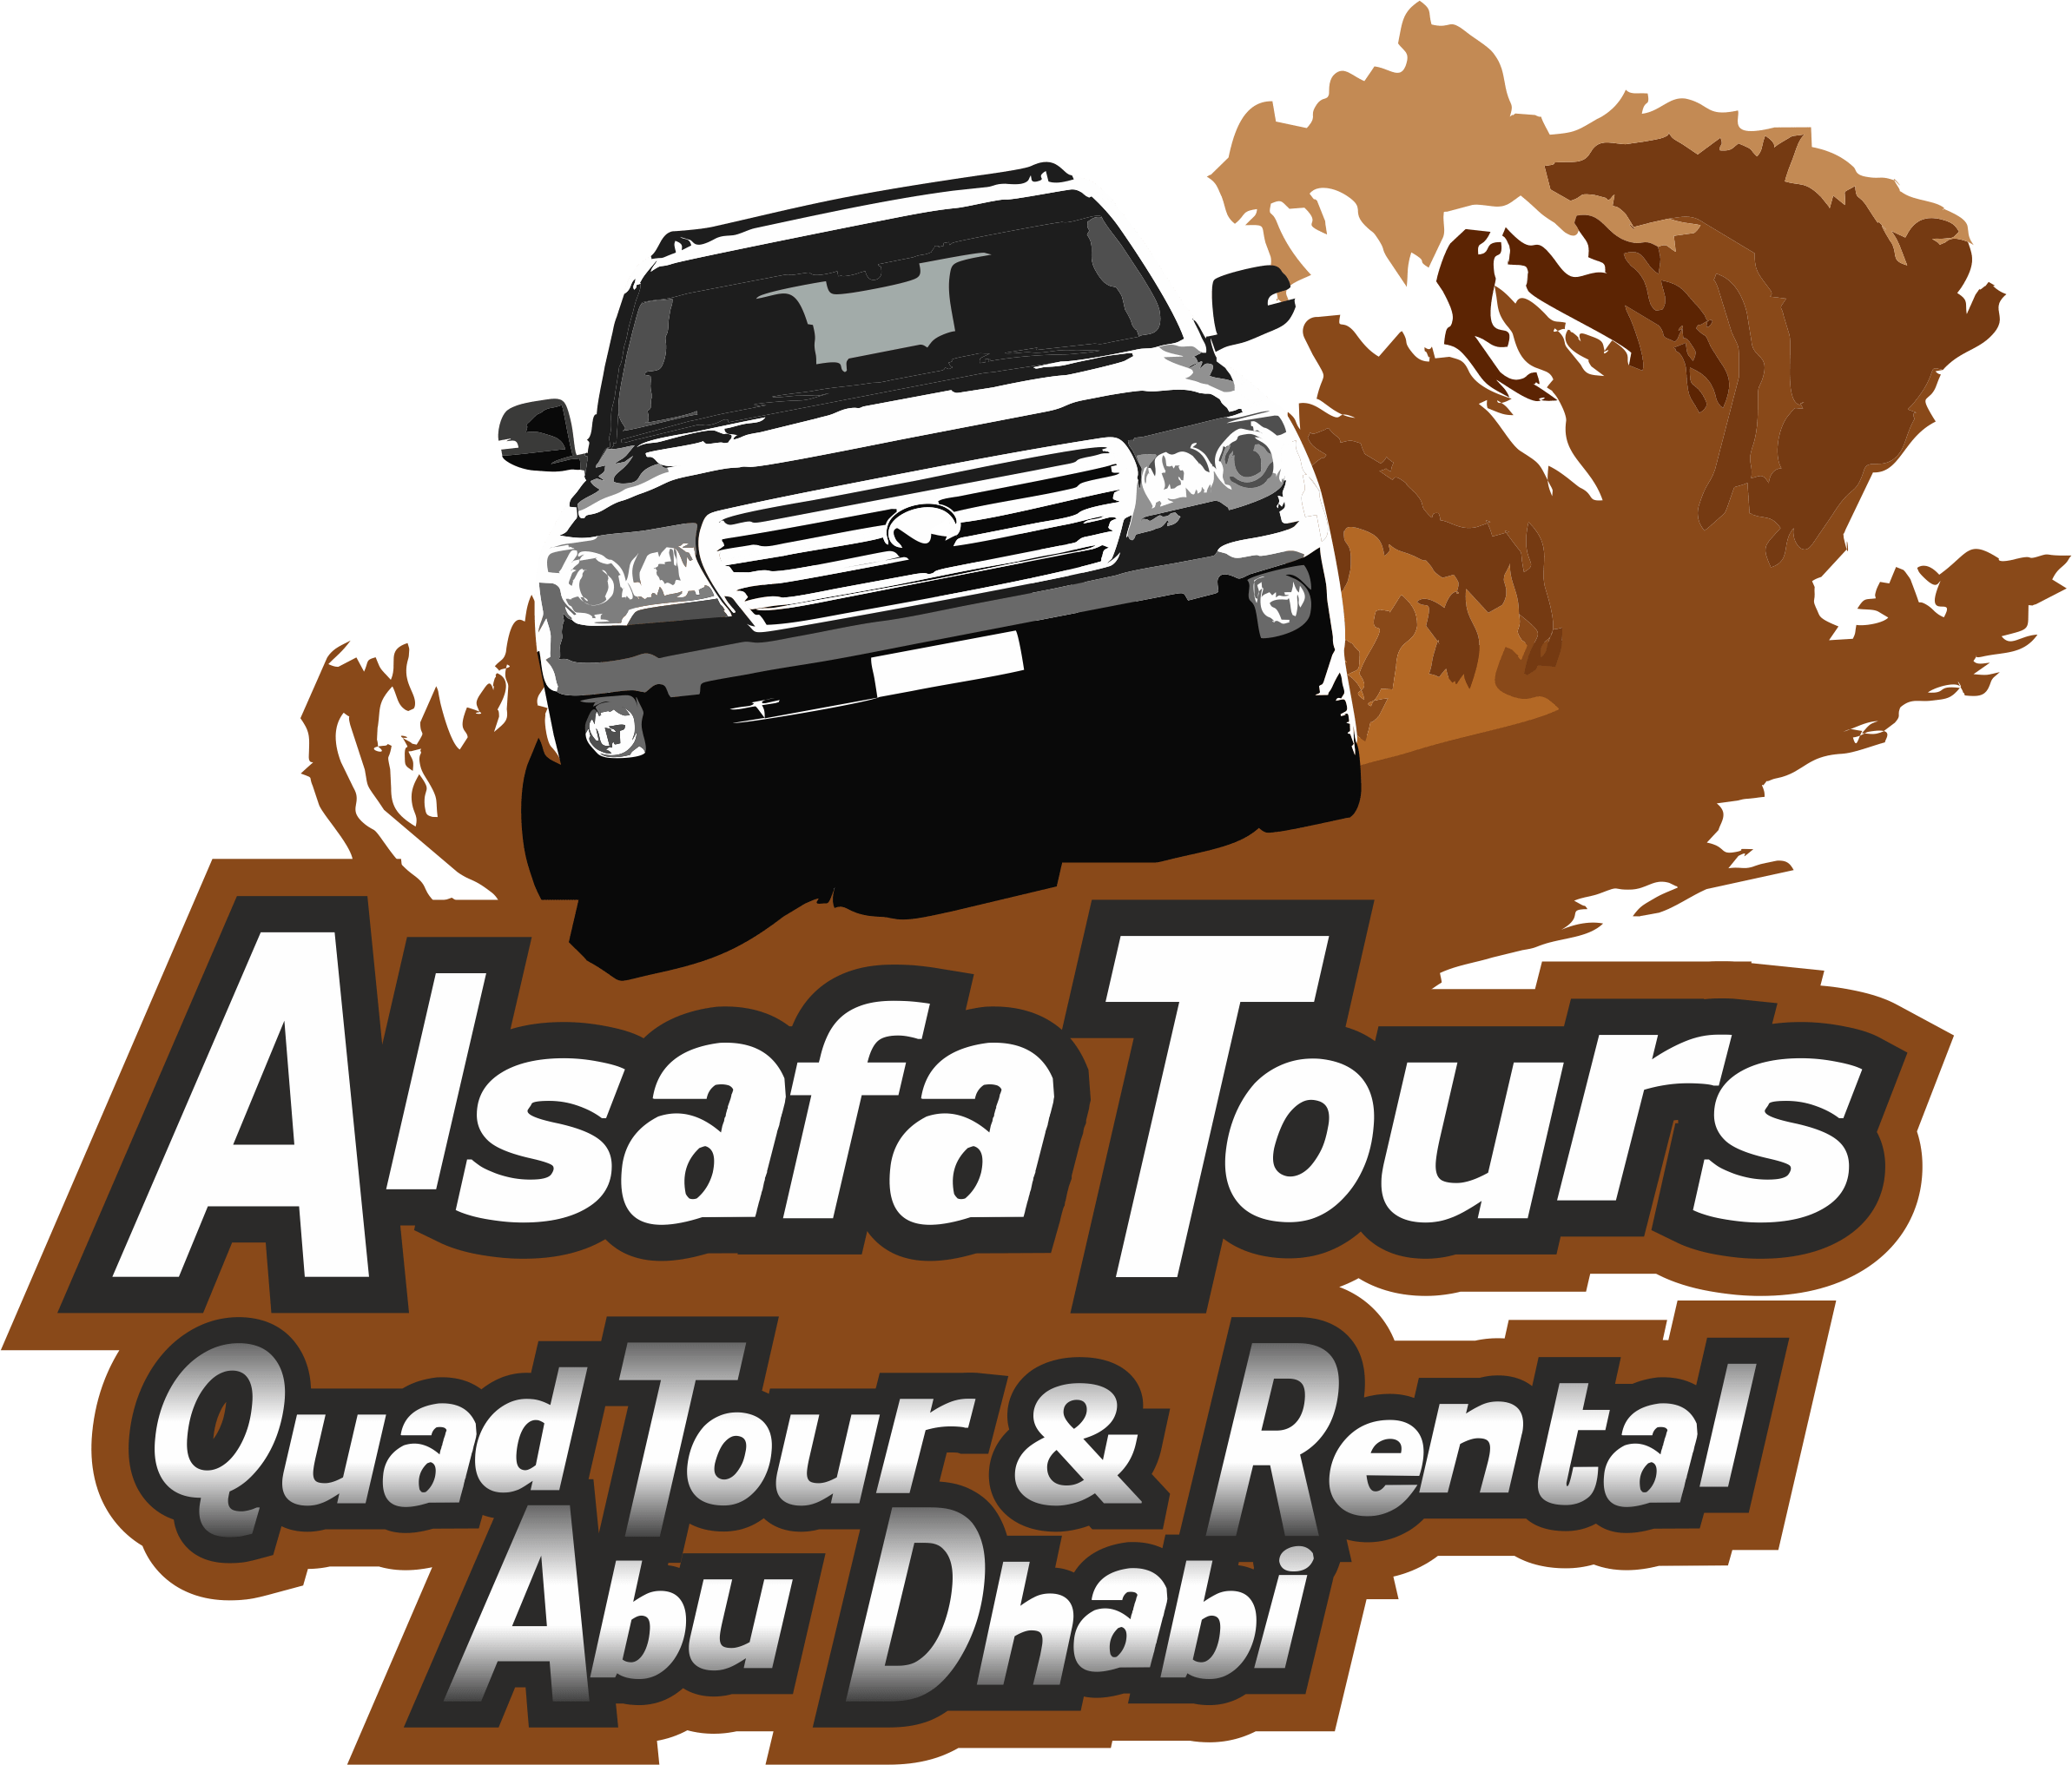 quad-bike-in-abu-dhabi-logo